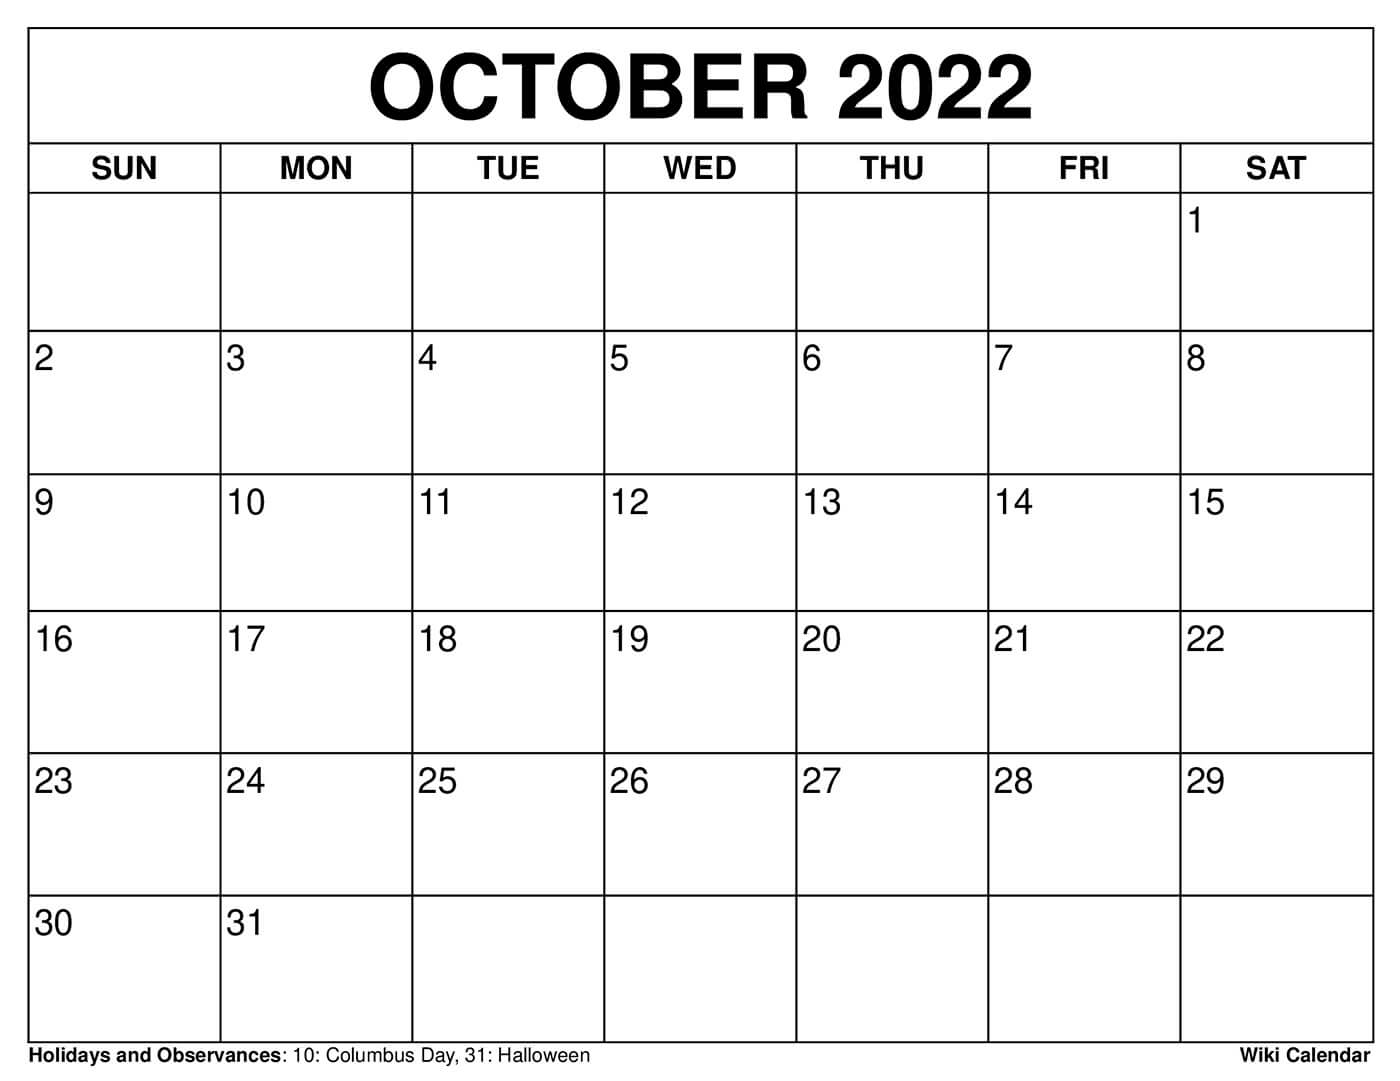 October 2022 Calendar Pdf Free Printable October 2022 Calendars - Wiki Calendar